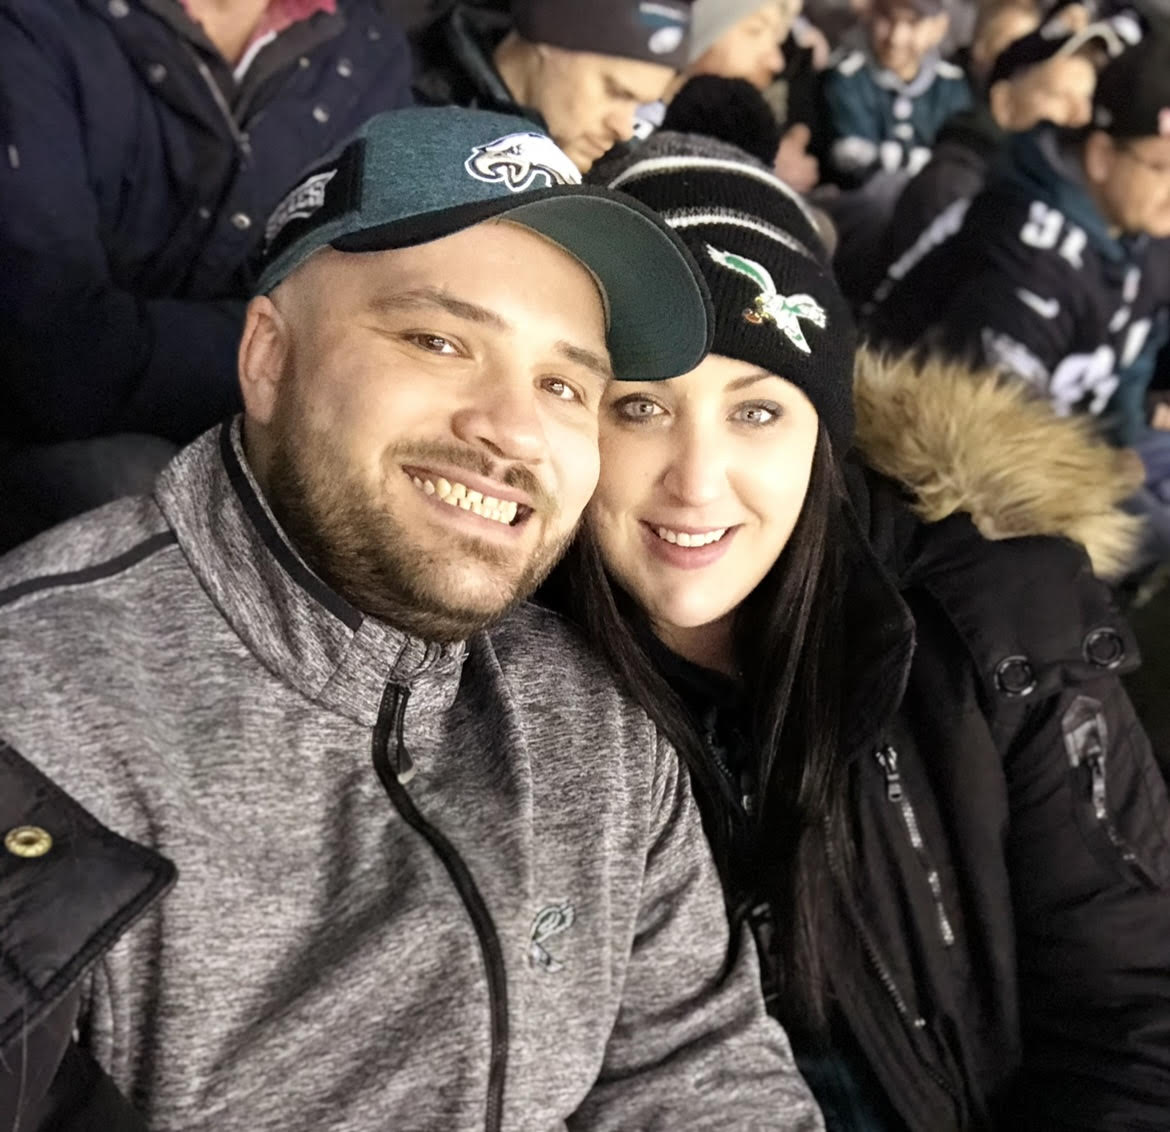 Mike Gronczewski and his fiance Colleen Siddall at a Philadelphia Eagles game